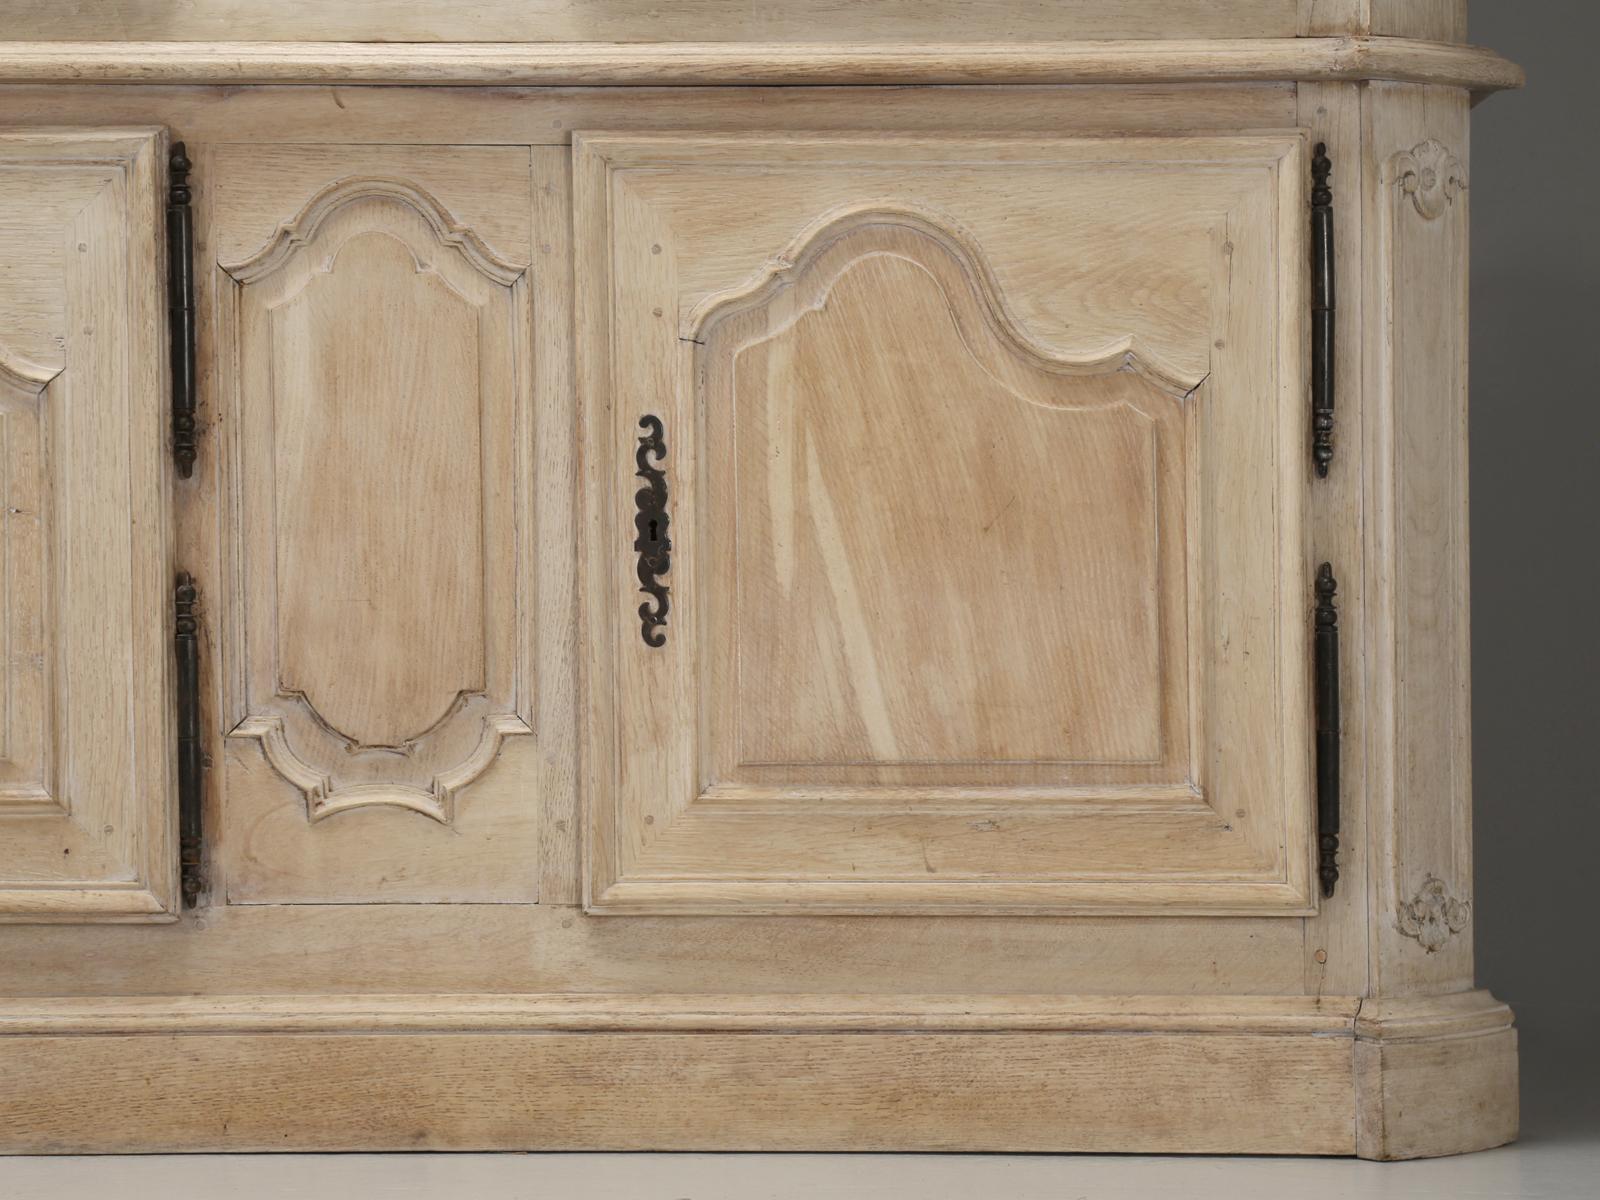 Antique French Bookcase or Cabinet in Limed White Oak Older Restoration c1800's For Sale 4